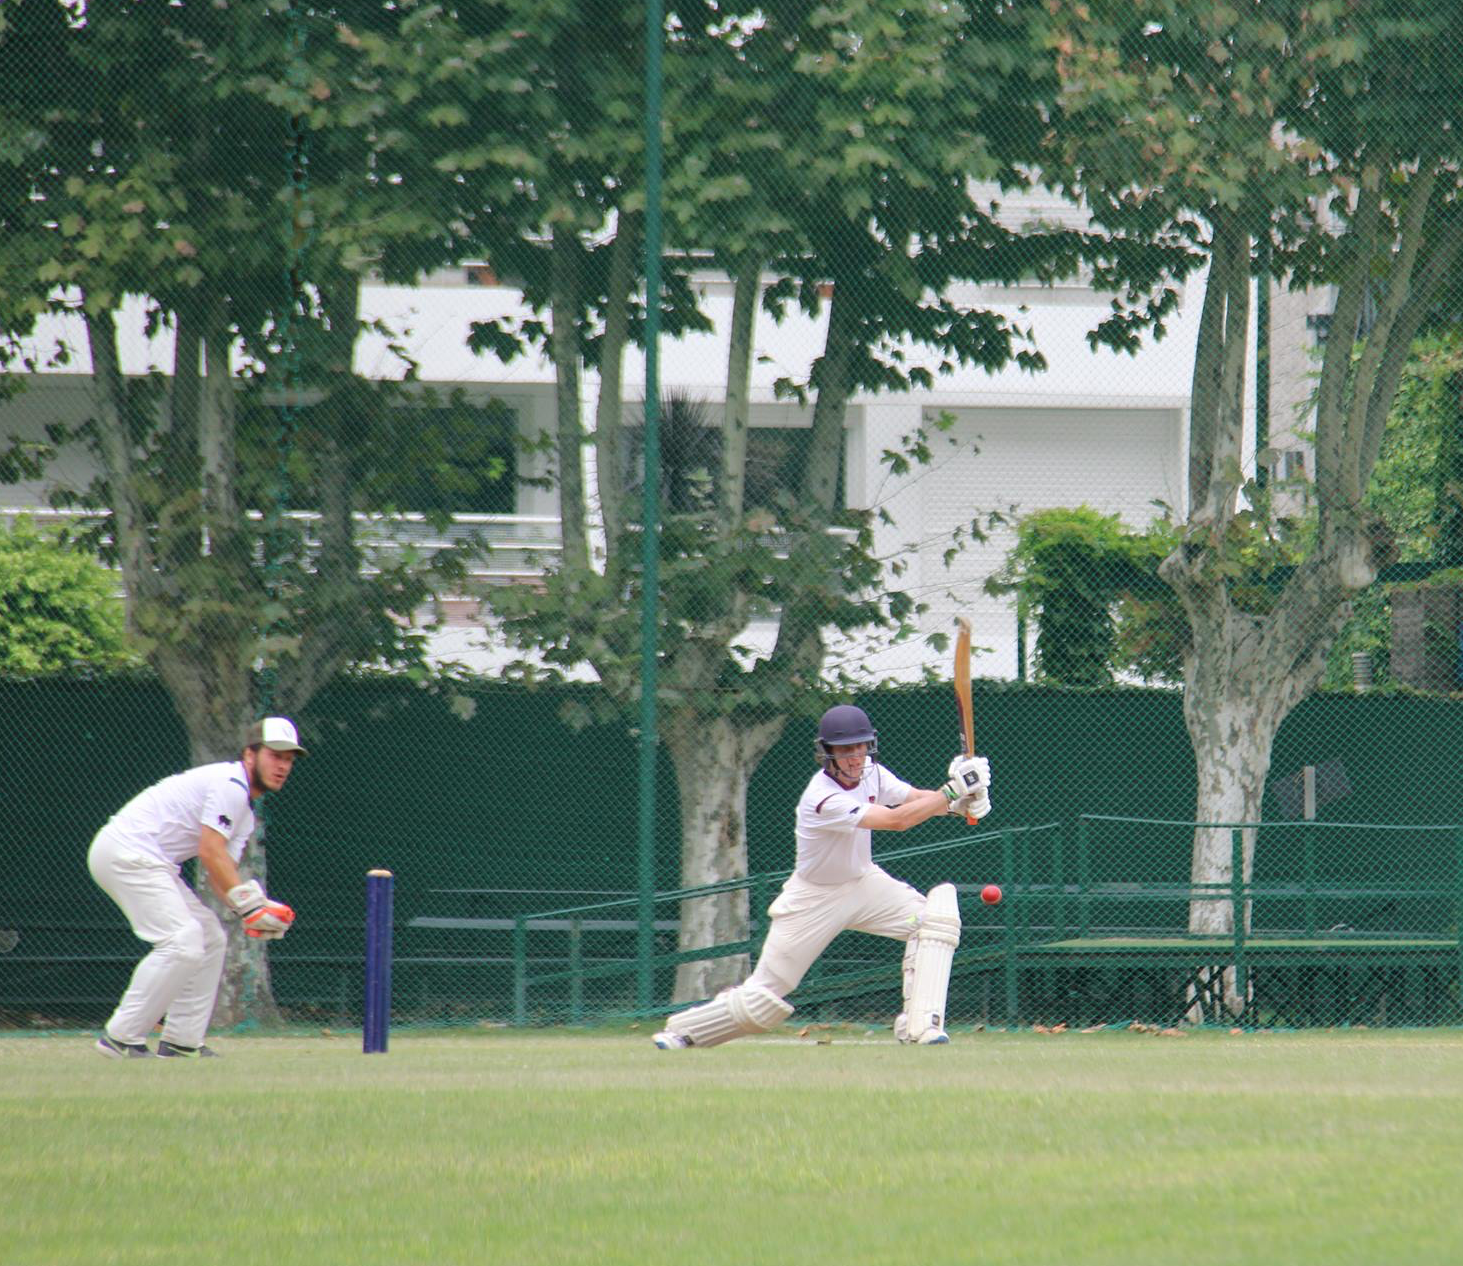 Batter hits the cricket ball